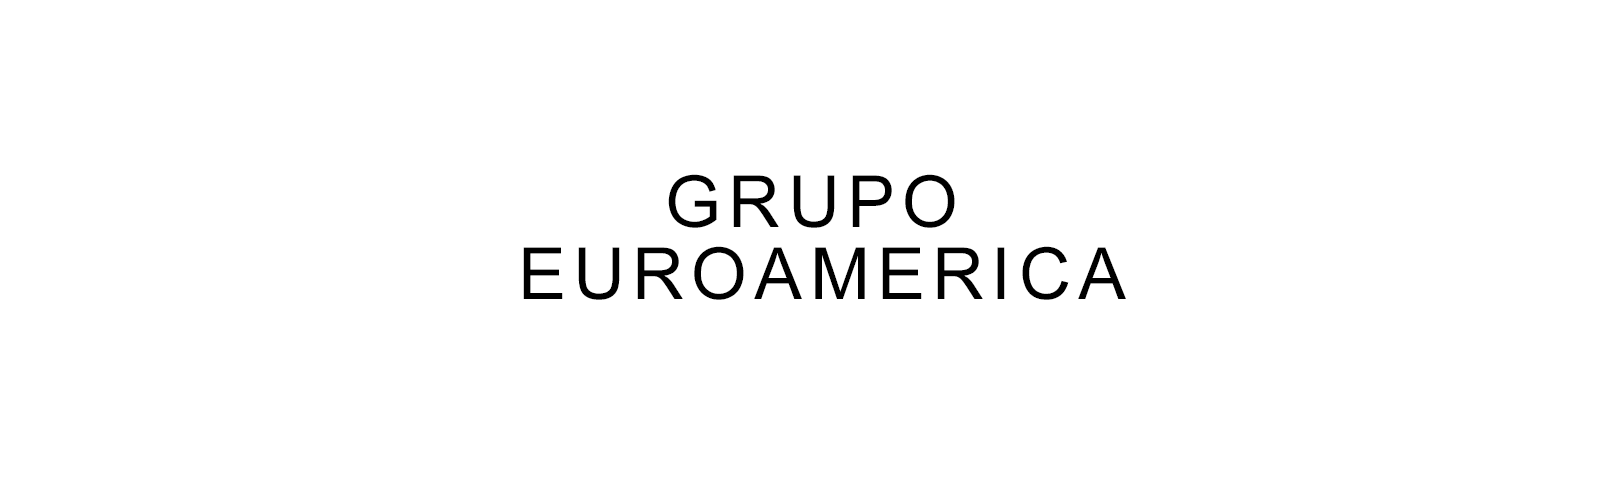 Grupo-Euroamerica_Webinar_ABC-Site_Header_Placeholder_1600x489